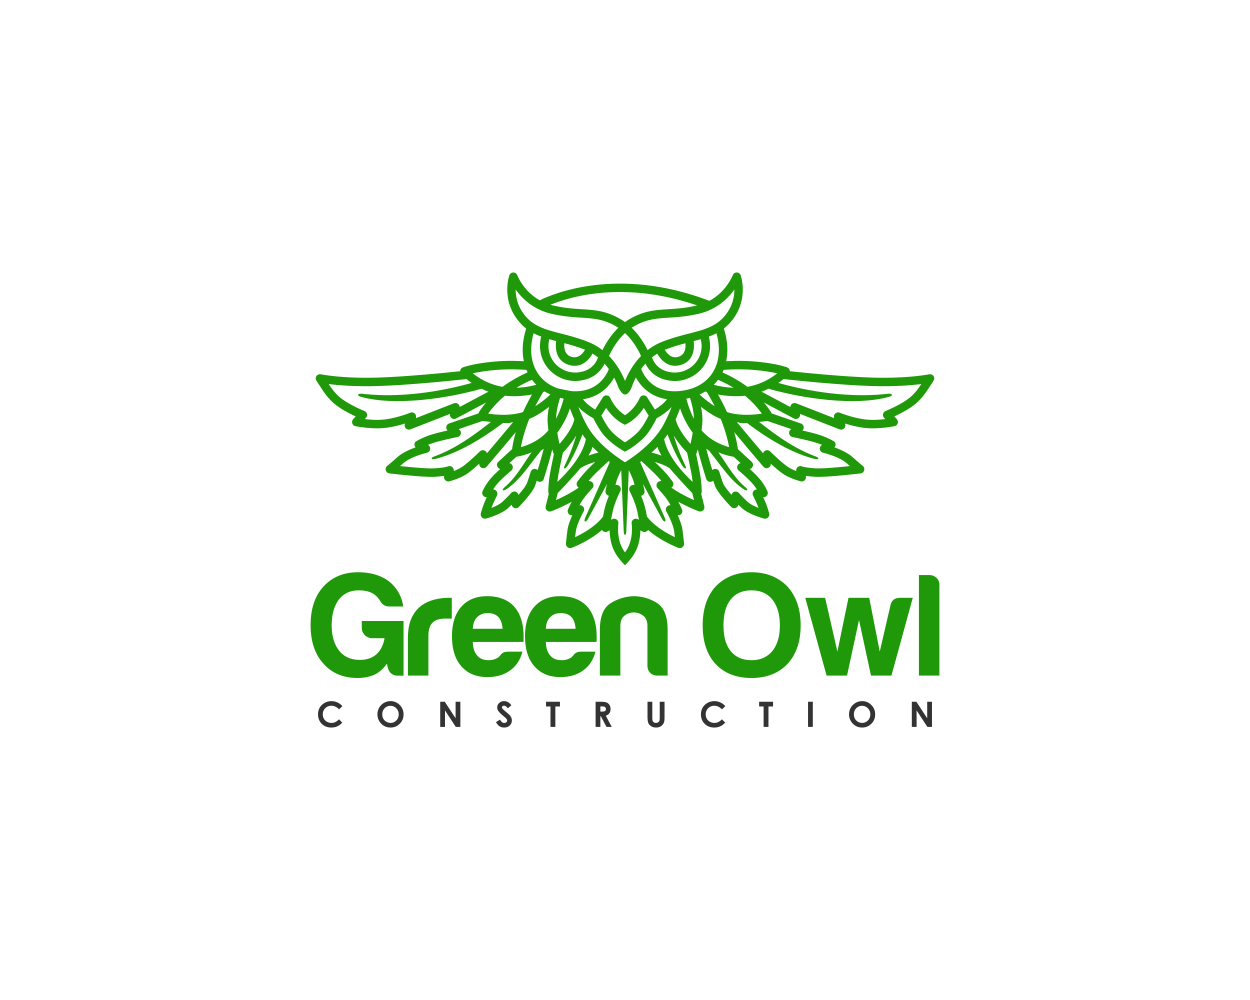 Green Owl Logo - Elegant, Playful, Construction Company Logo Design for Green Owl ...